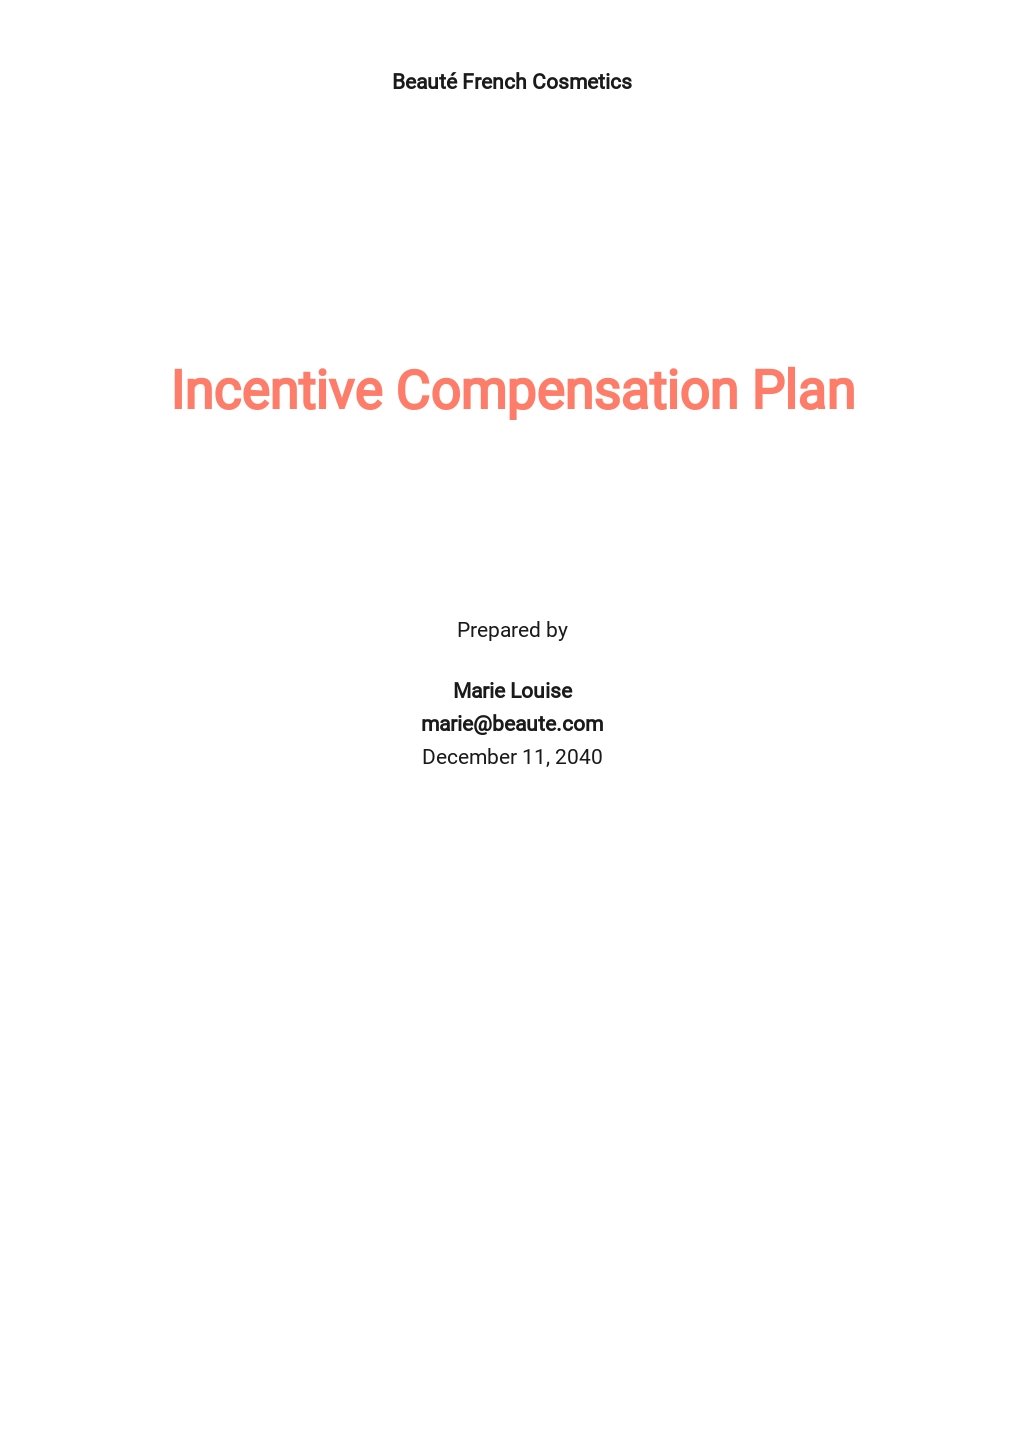 Incentive Compensation Plan Template.jpe